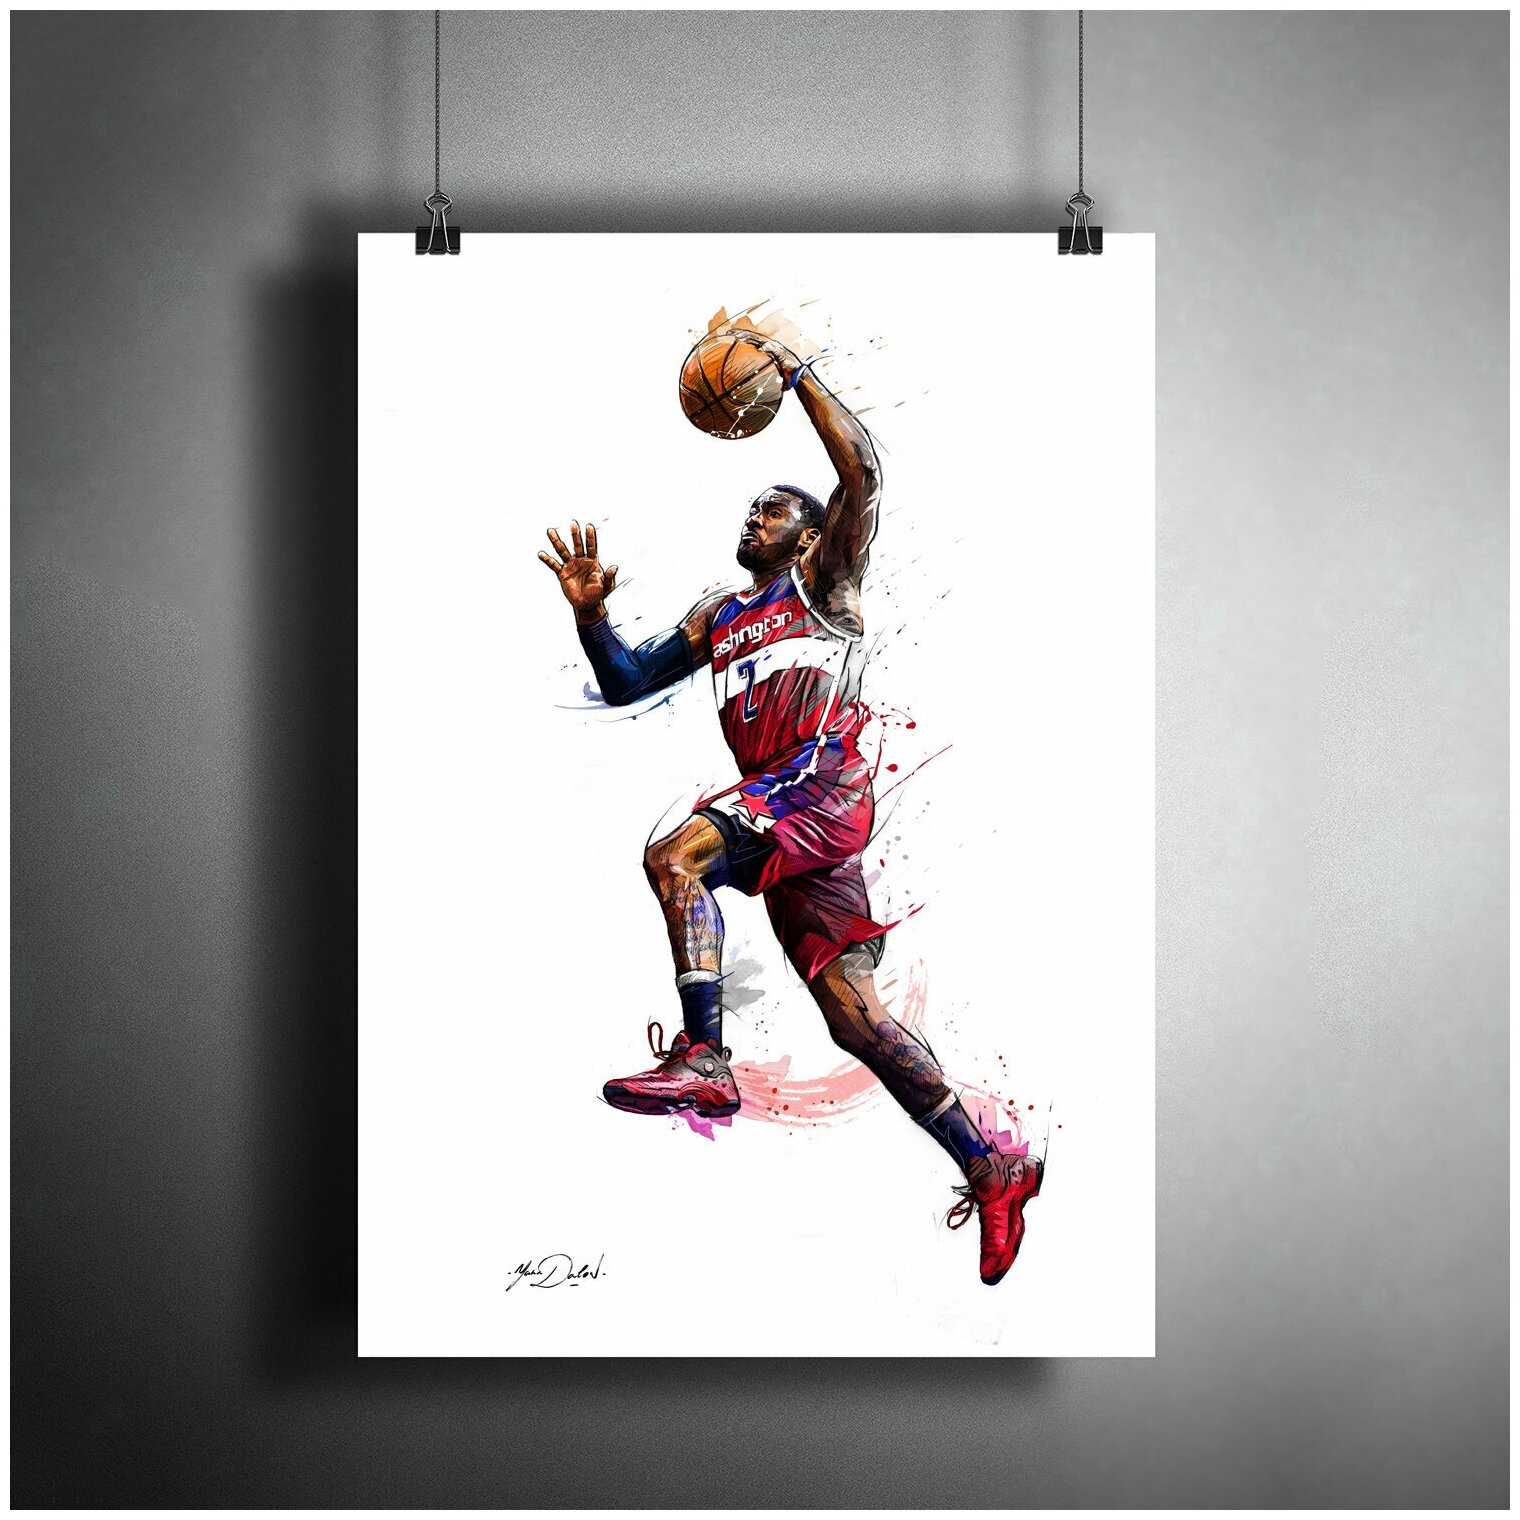 Постер плакат для интерьера "Американский баскетболист Джон Уолл. Johnathan Wall, NBA" / Декор дома, офиса, комнаты, квартиры A3 (297 x 420 мм)